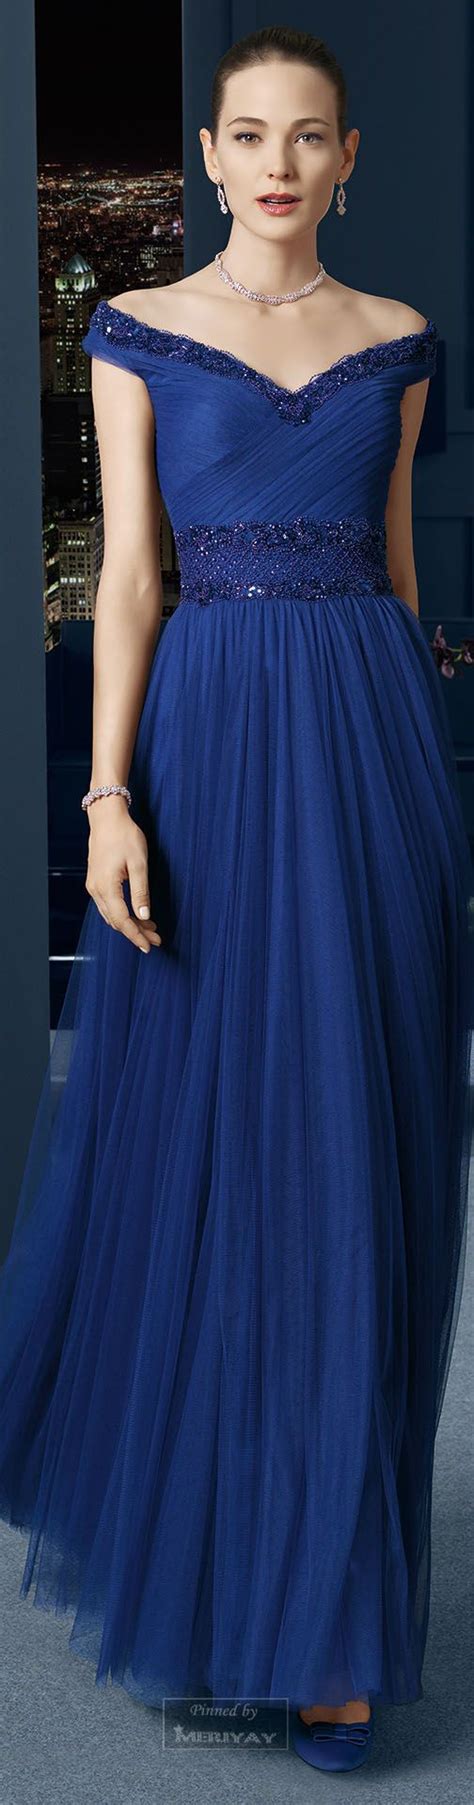 shoes  wear  royal blue dress   outfits evening gowns elegant dresses